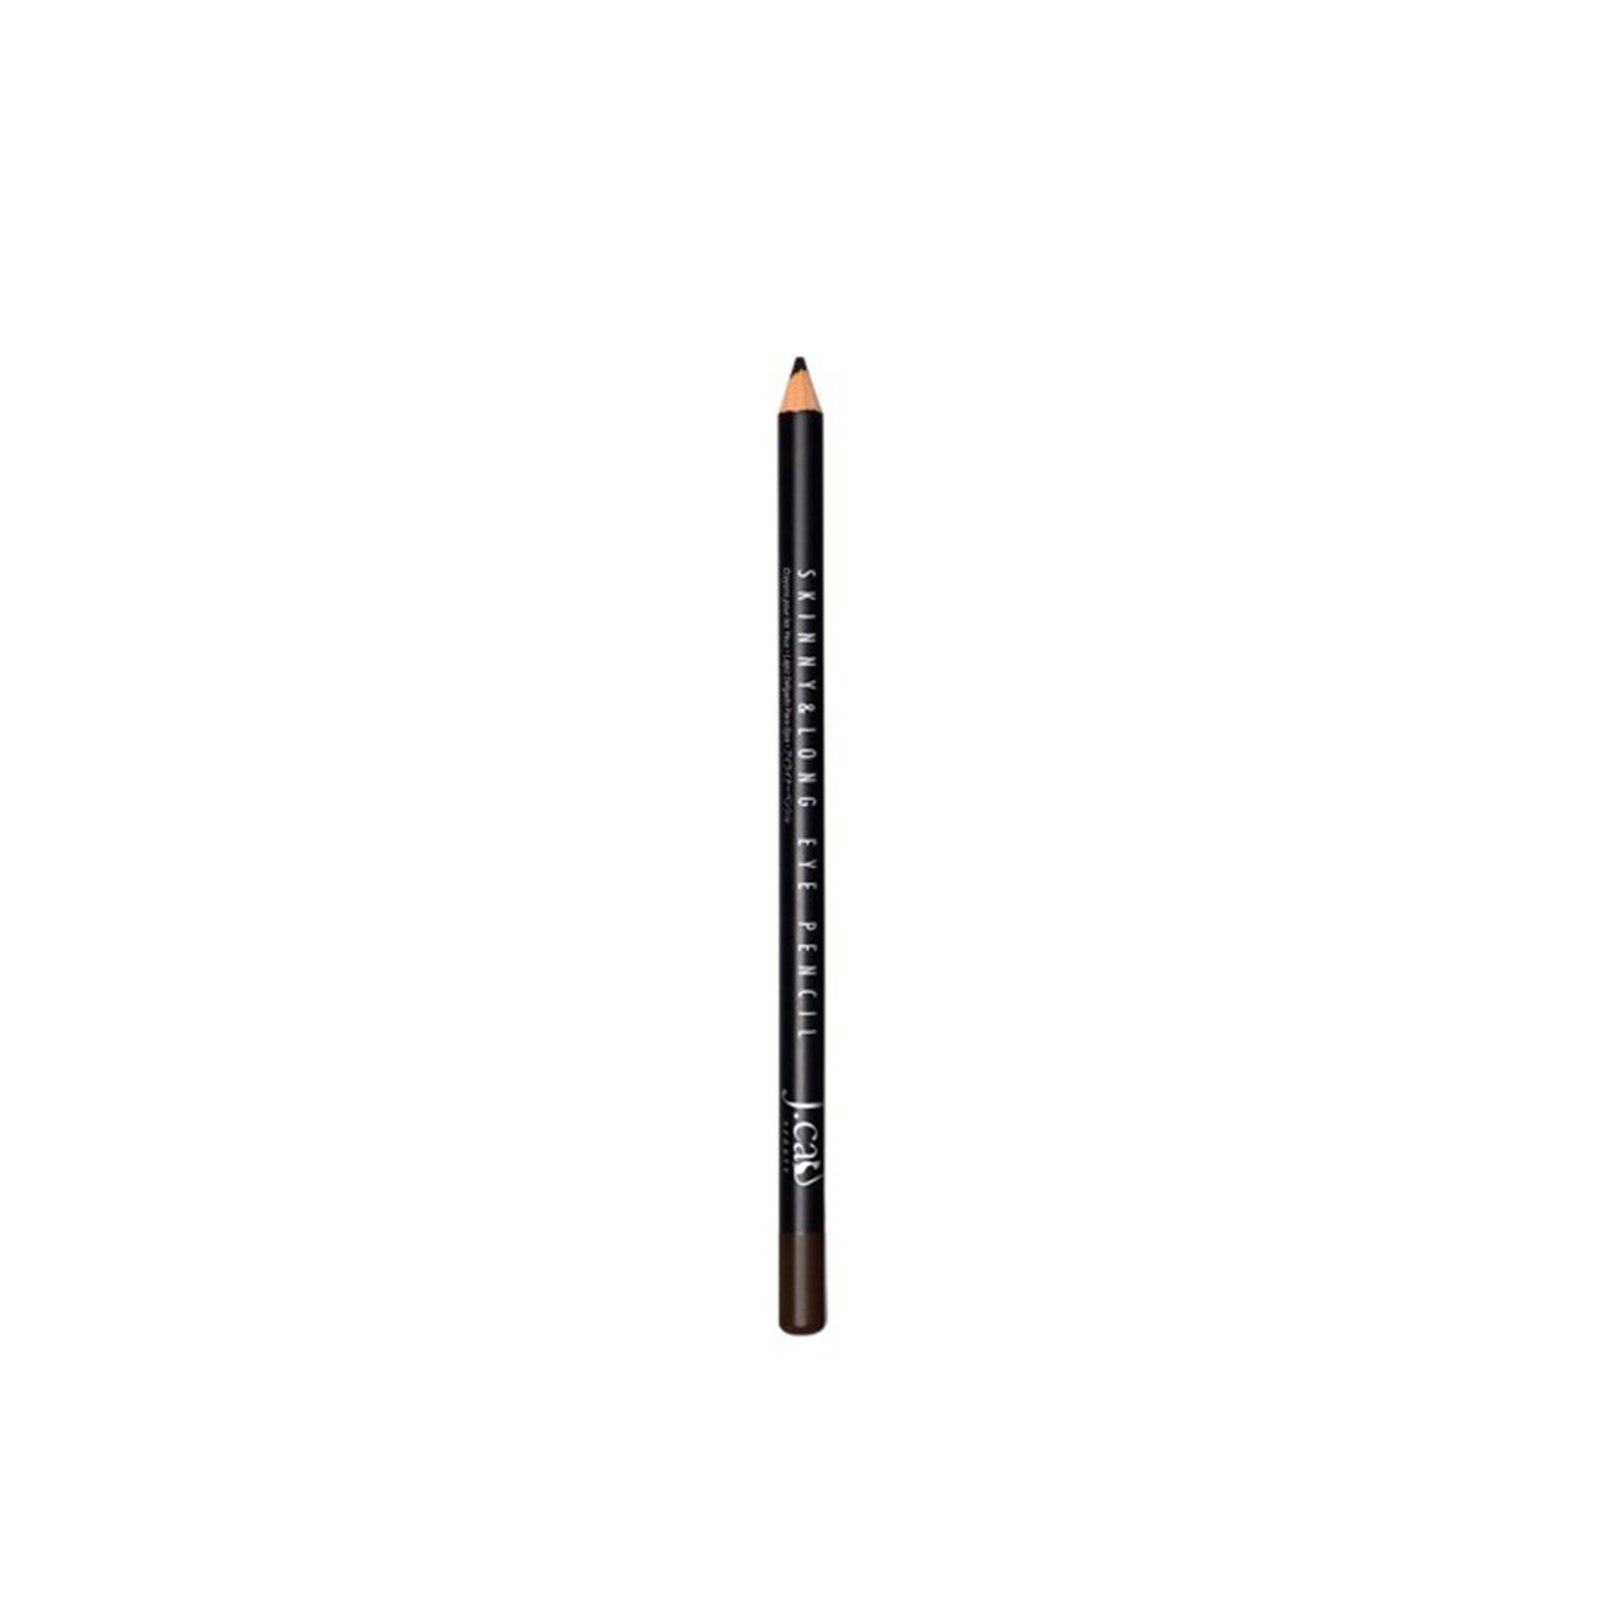 J.Cat Skinny & Long Eye Pencil 112 Dark Brown 2g